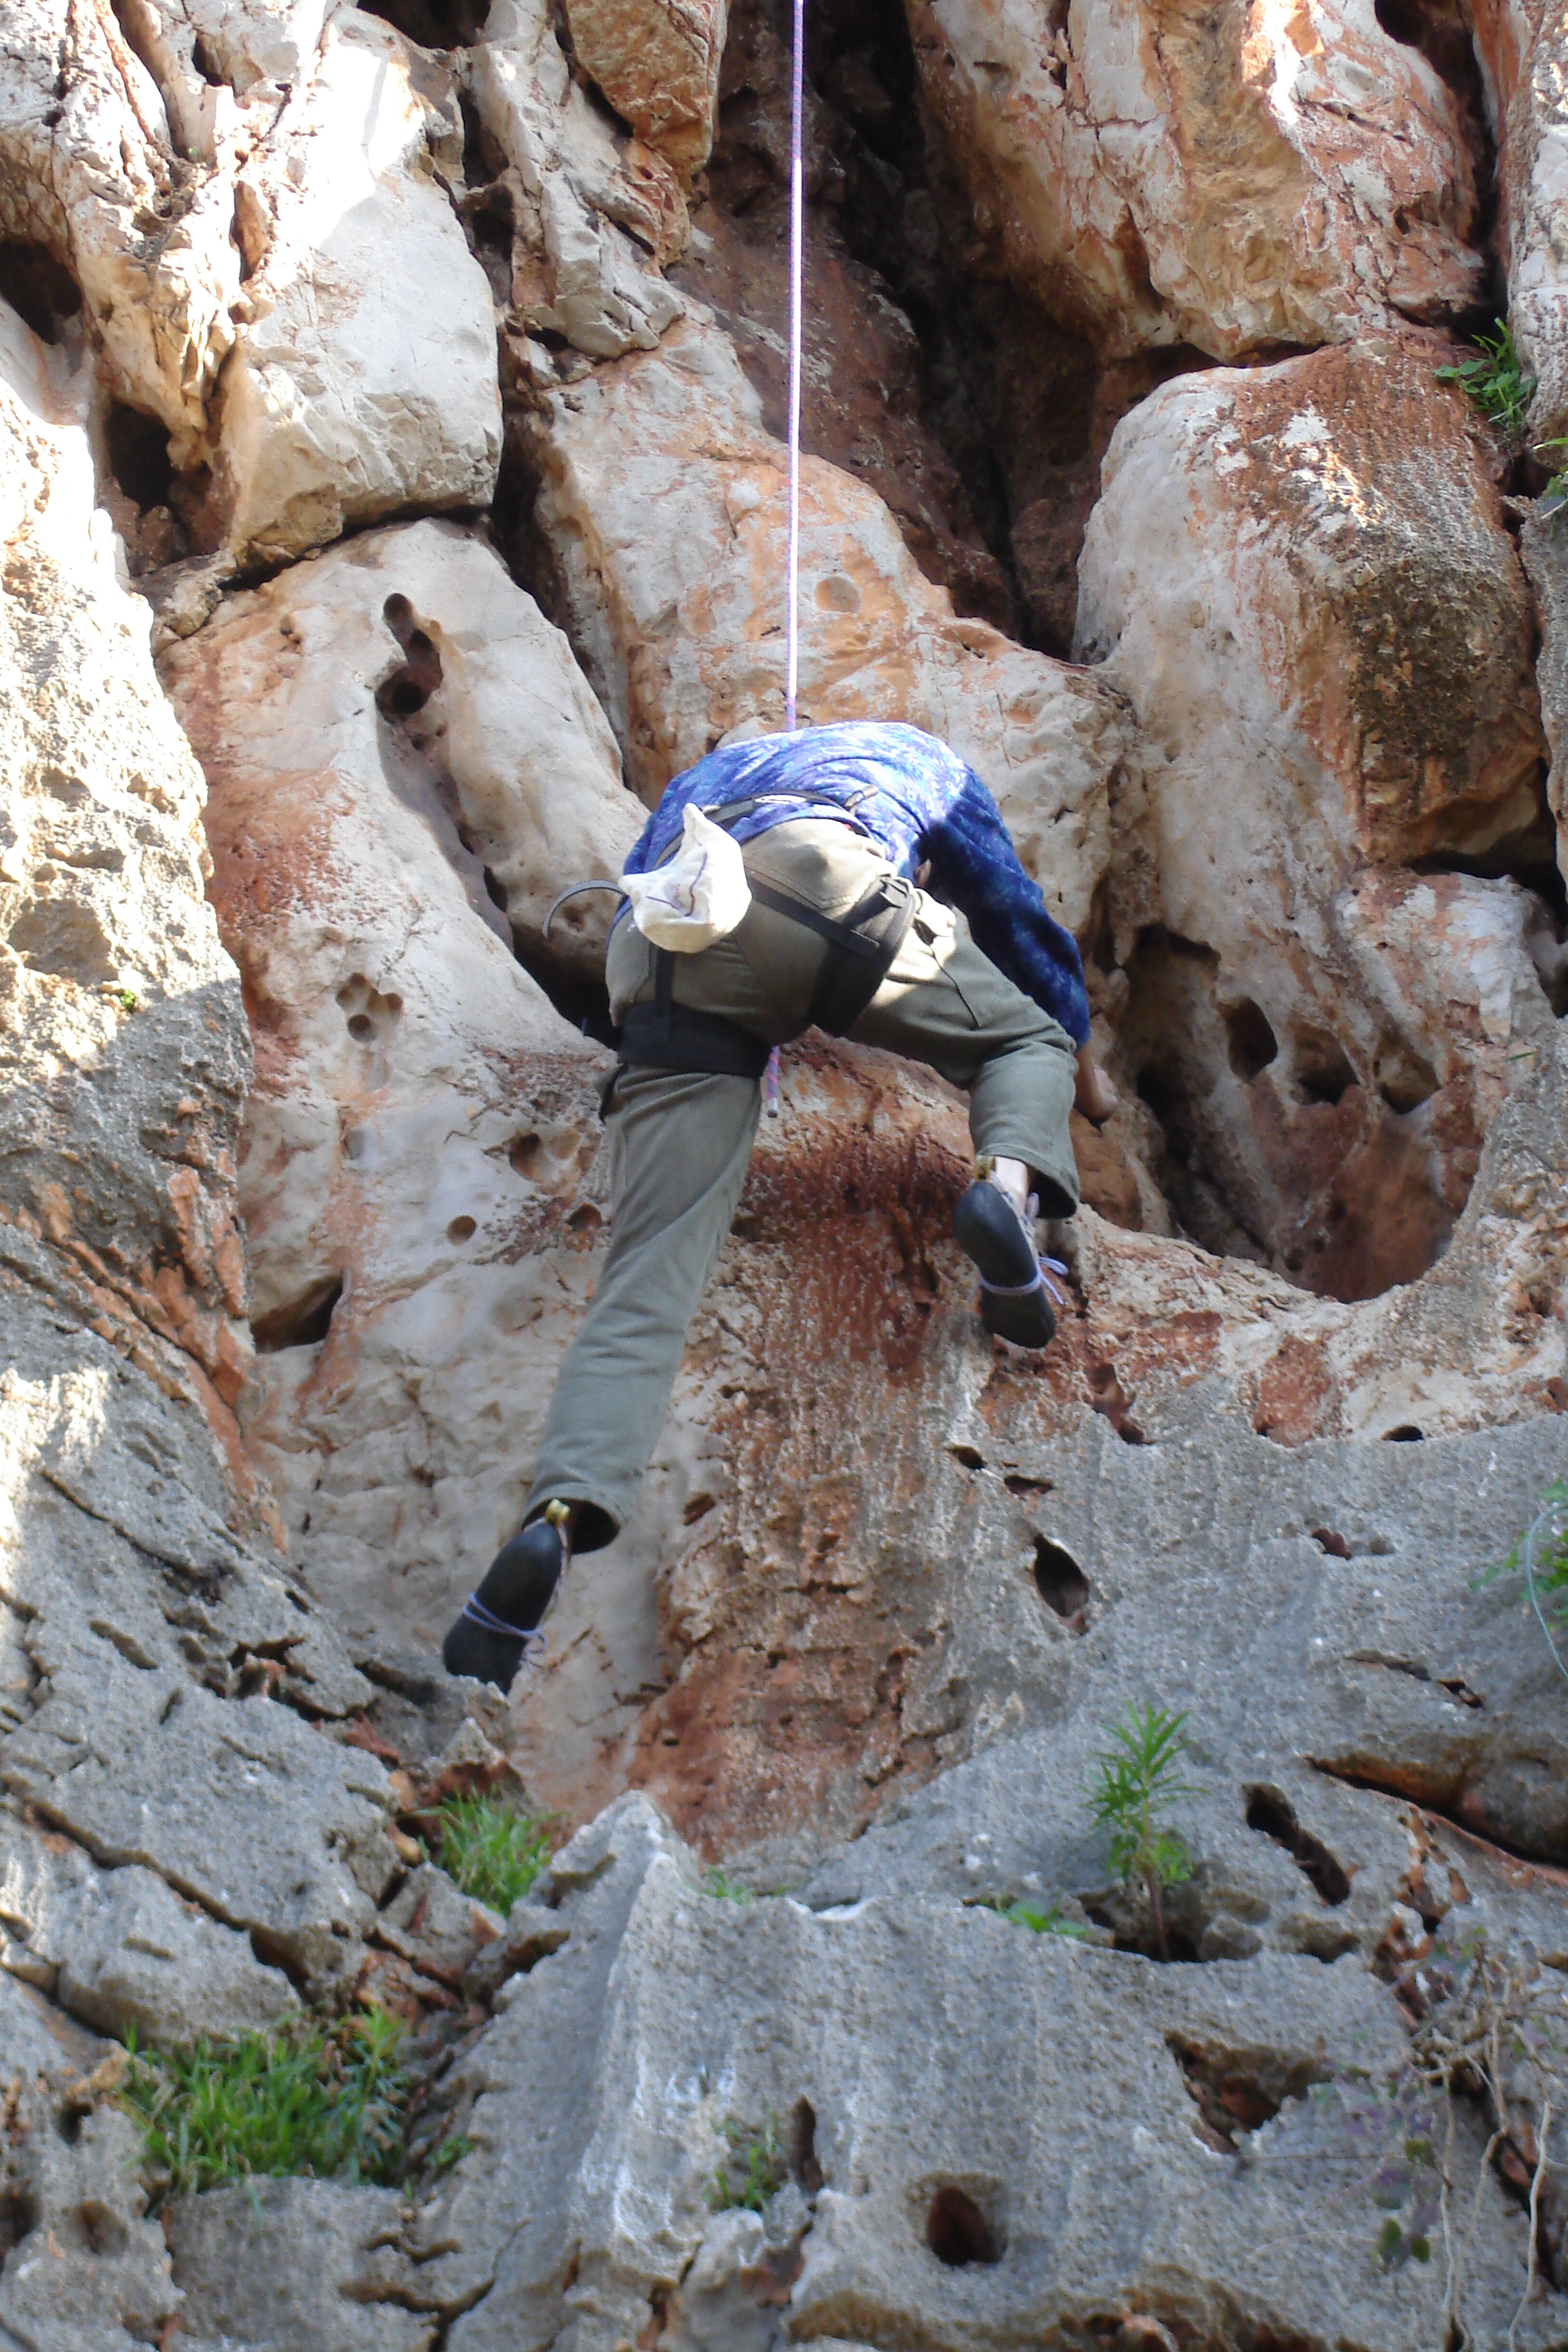 Mountain climber featured in A SICILIAN ODYSSEY, climbing Mt. Pellegrino Sicily